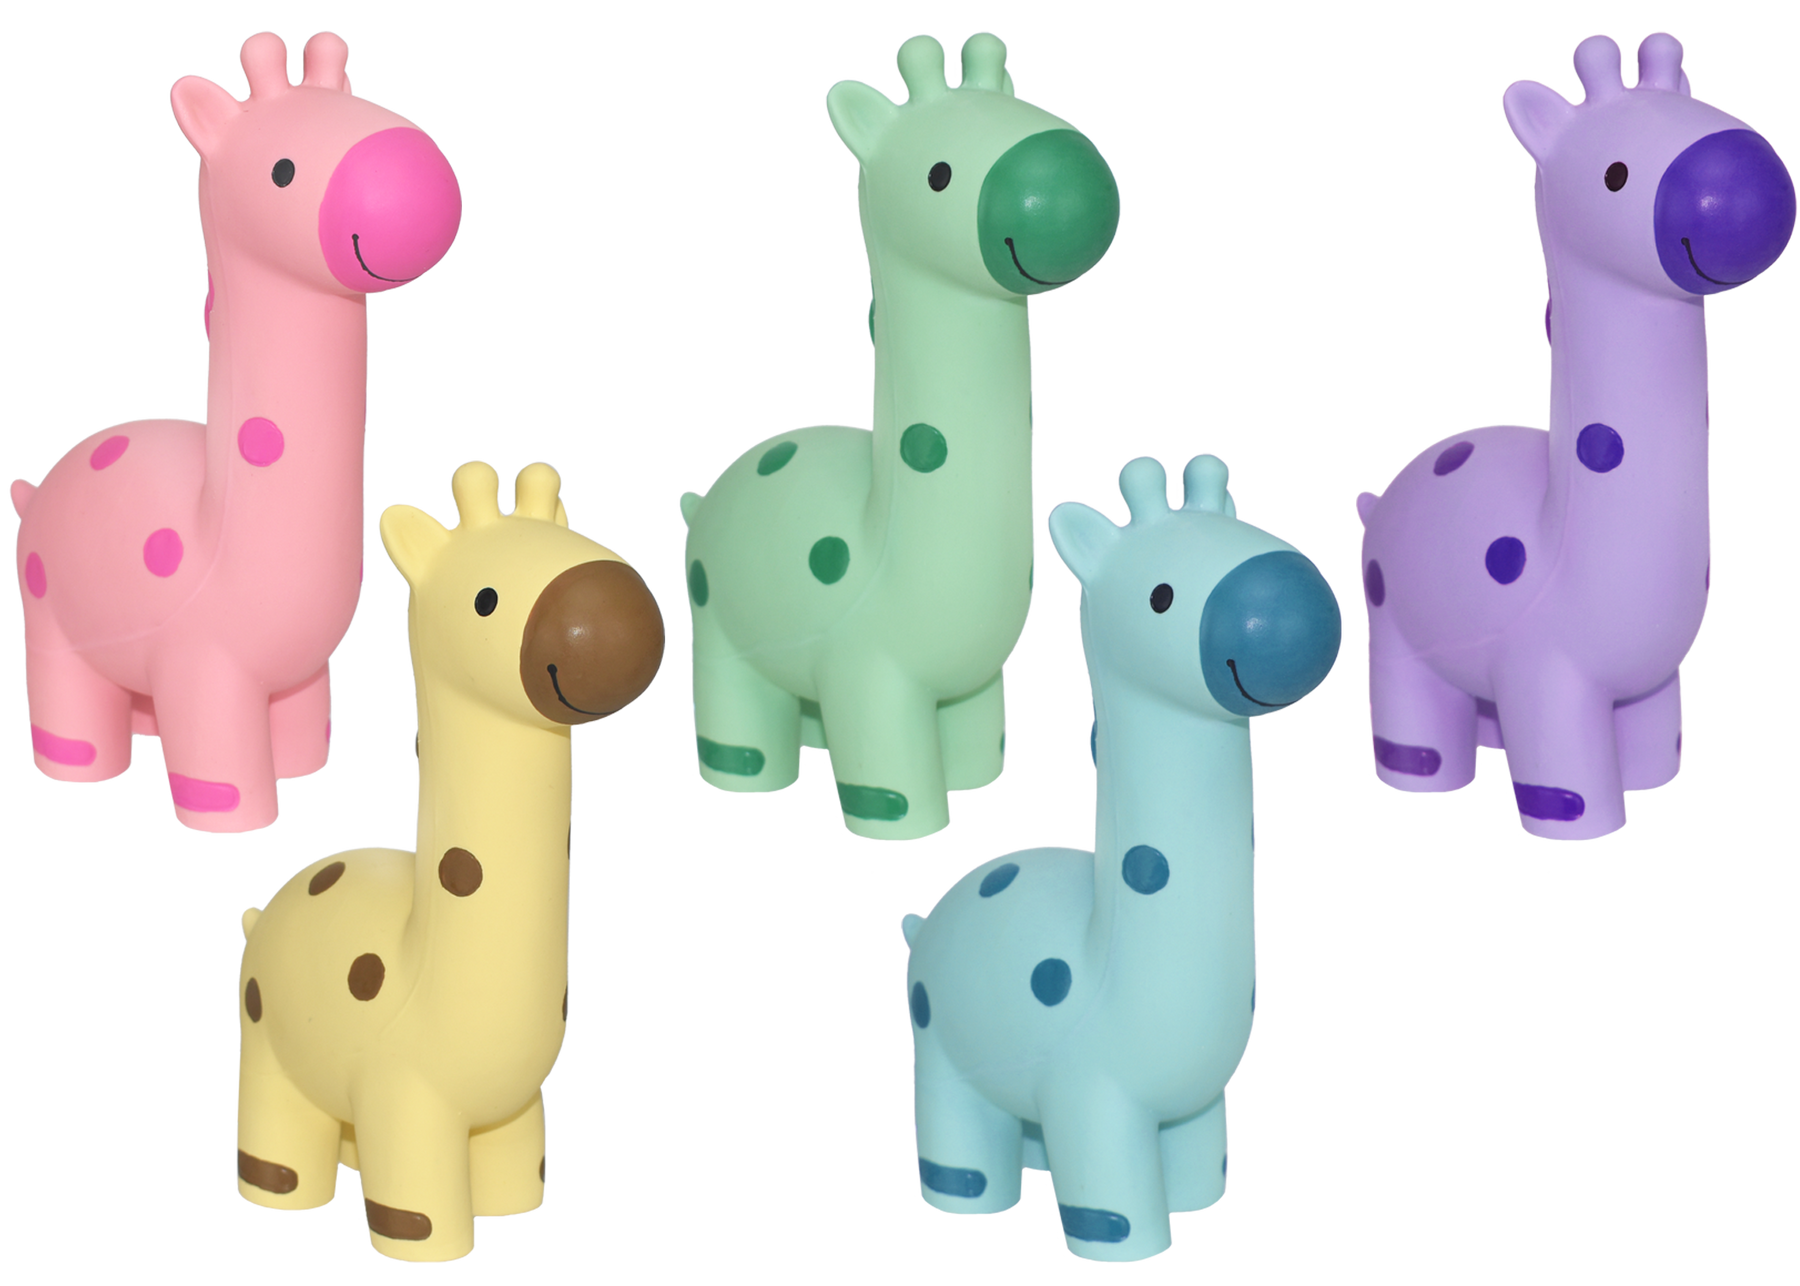 Multipet - MiniPet Latex Giraffe Dog Toys